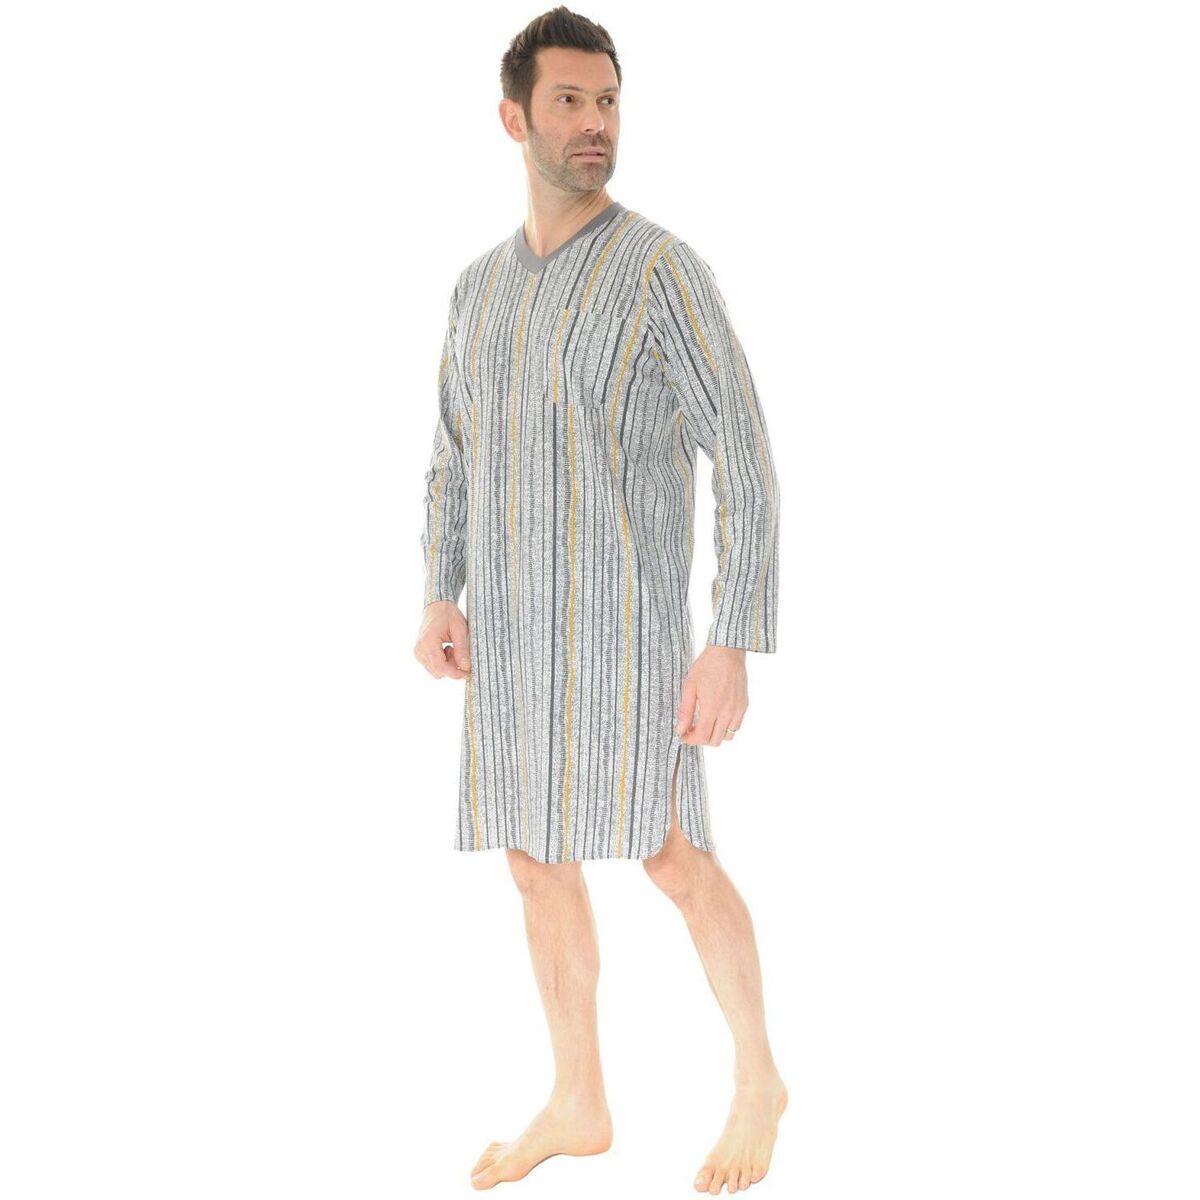 Kleidung Herren Pyjamas/ Nachthemden Christian Cane SILVIO Grau